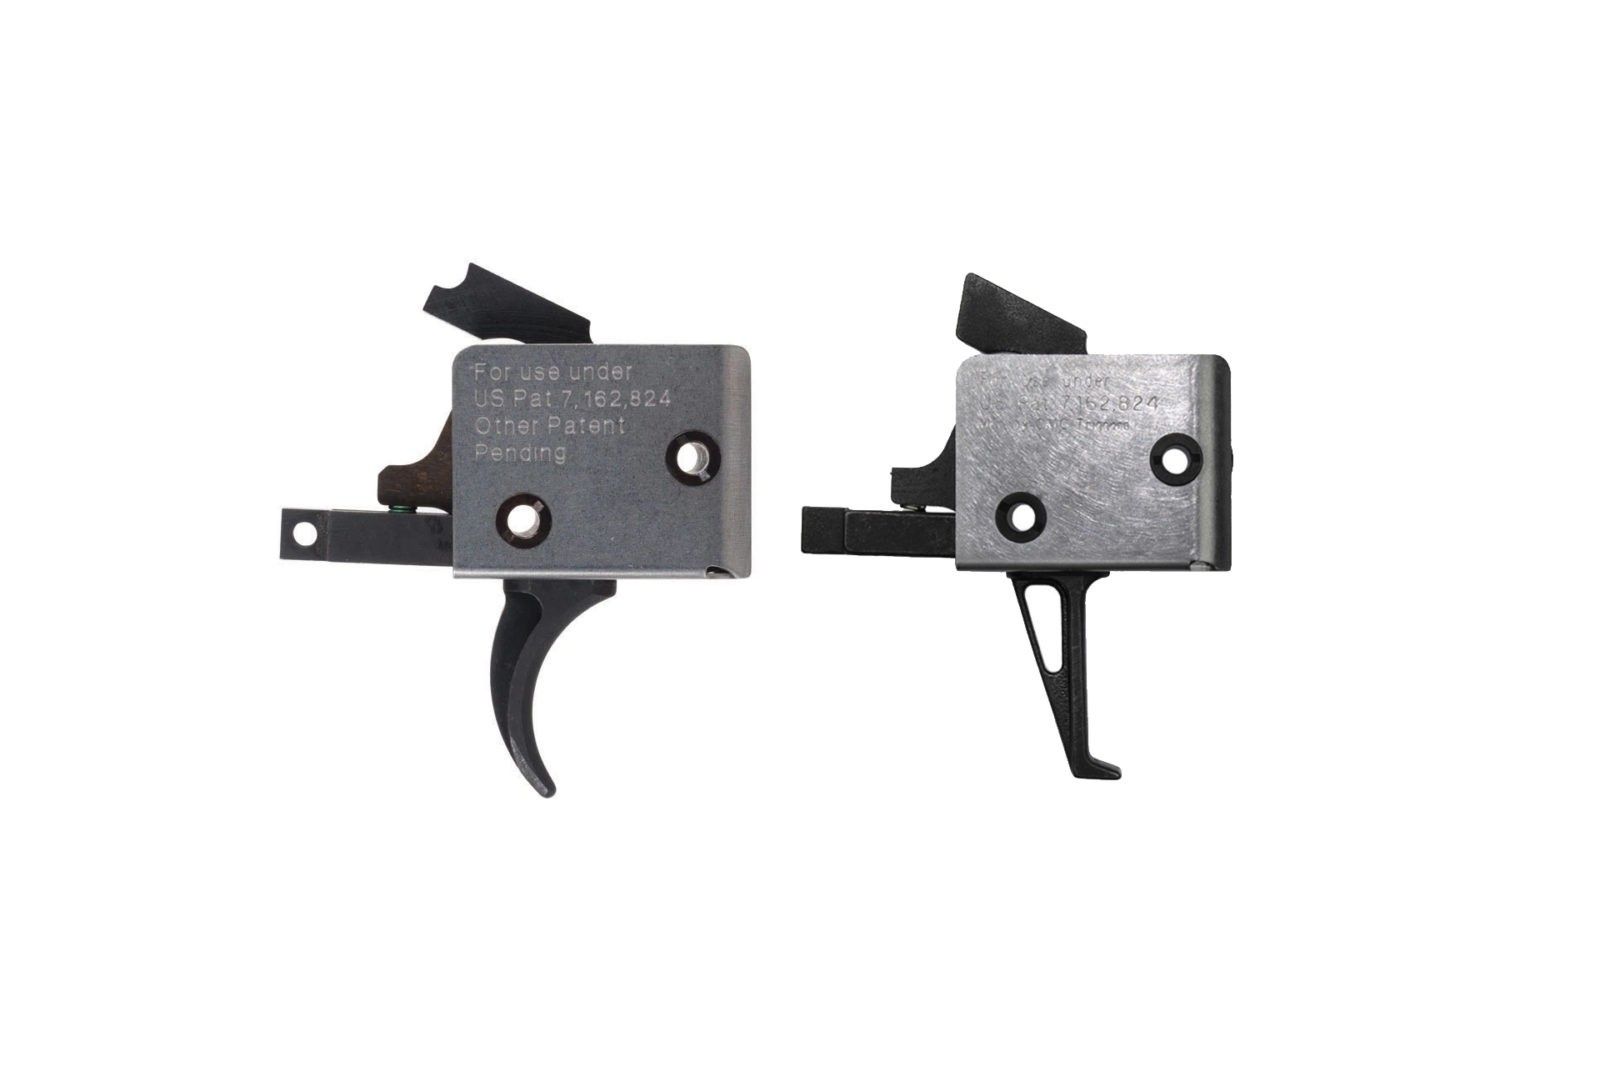 CMC Triggers Anti-Walk AR-15 Trigger Pin Set - Small